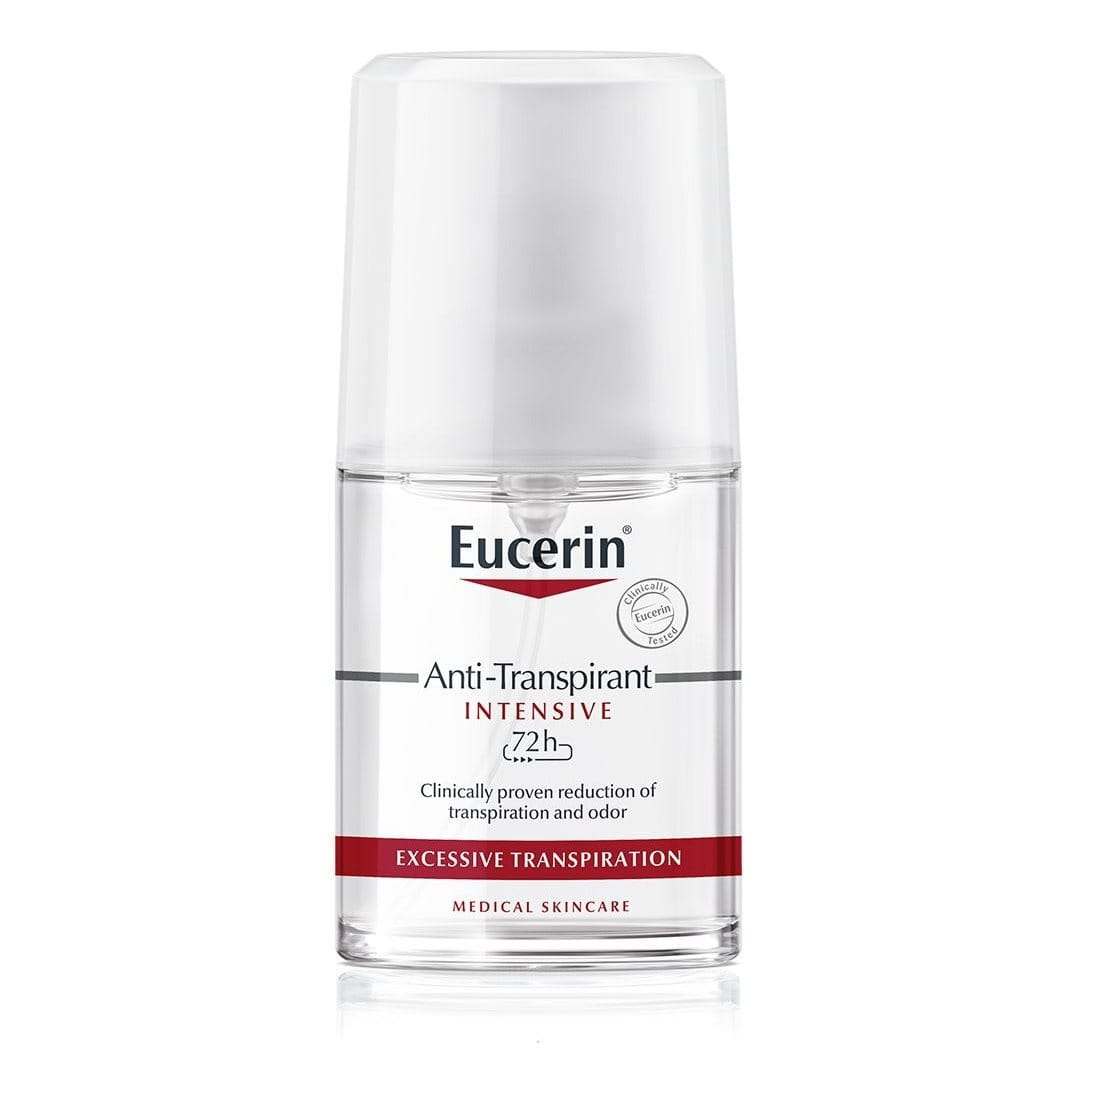 72h Anti-Transpirant Intensive Pump sweating | Eucerin